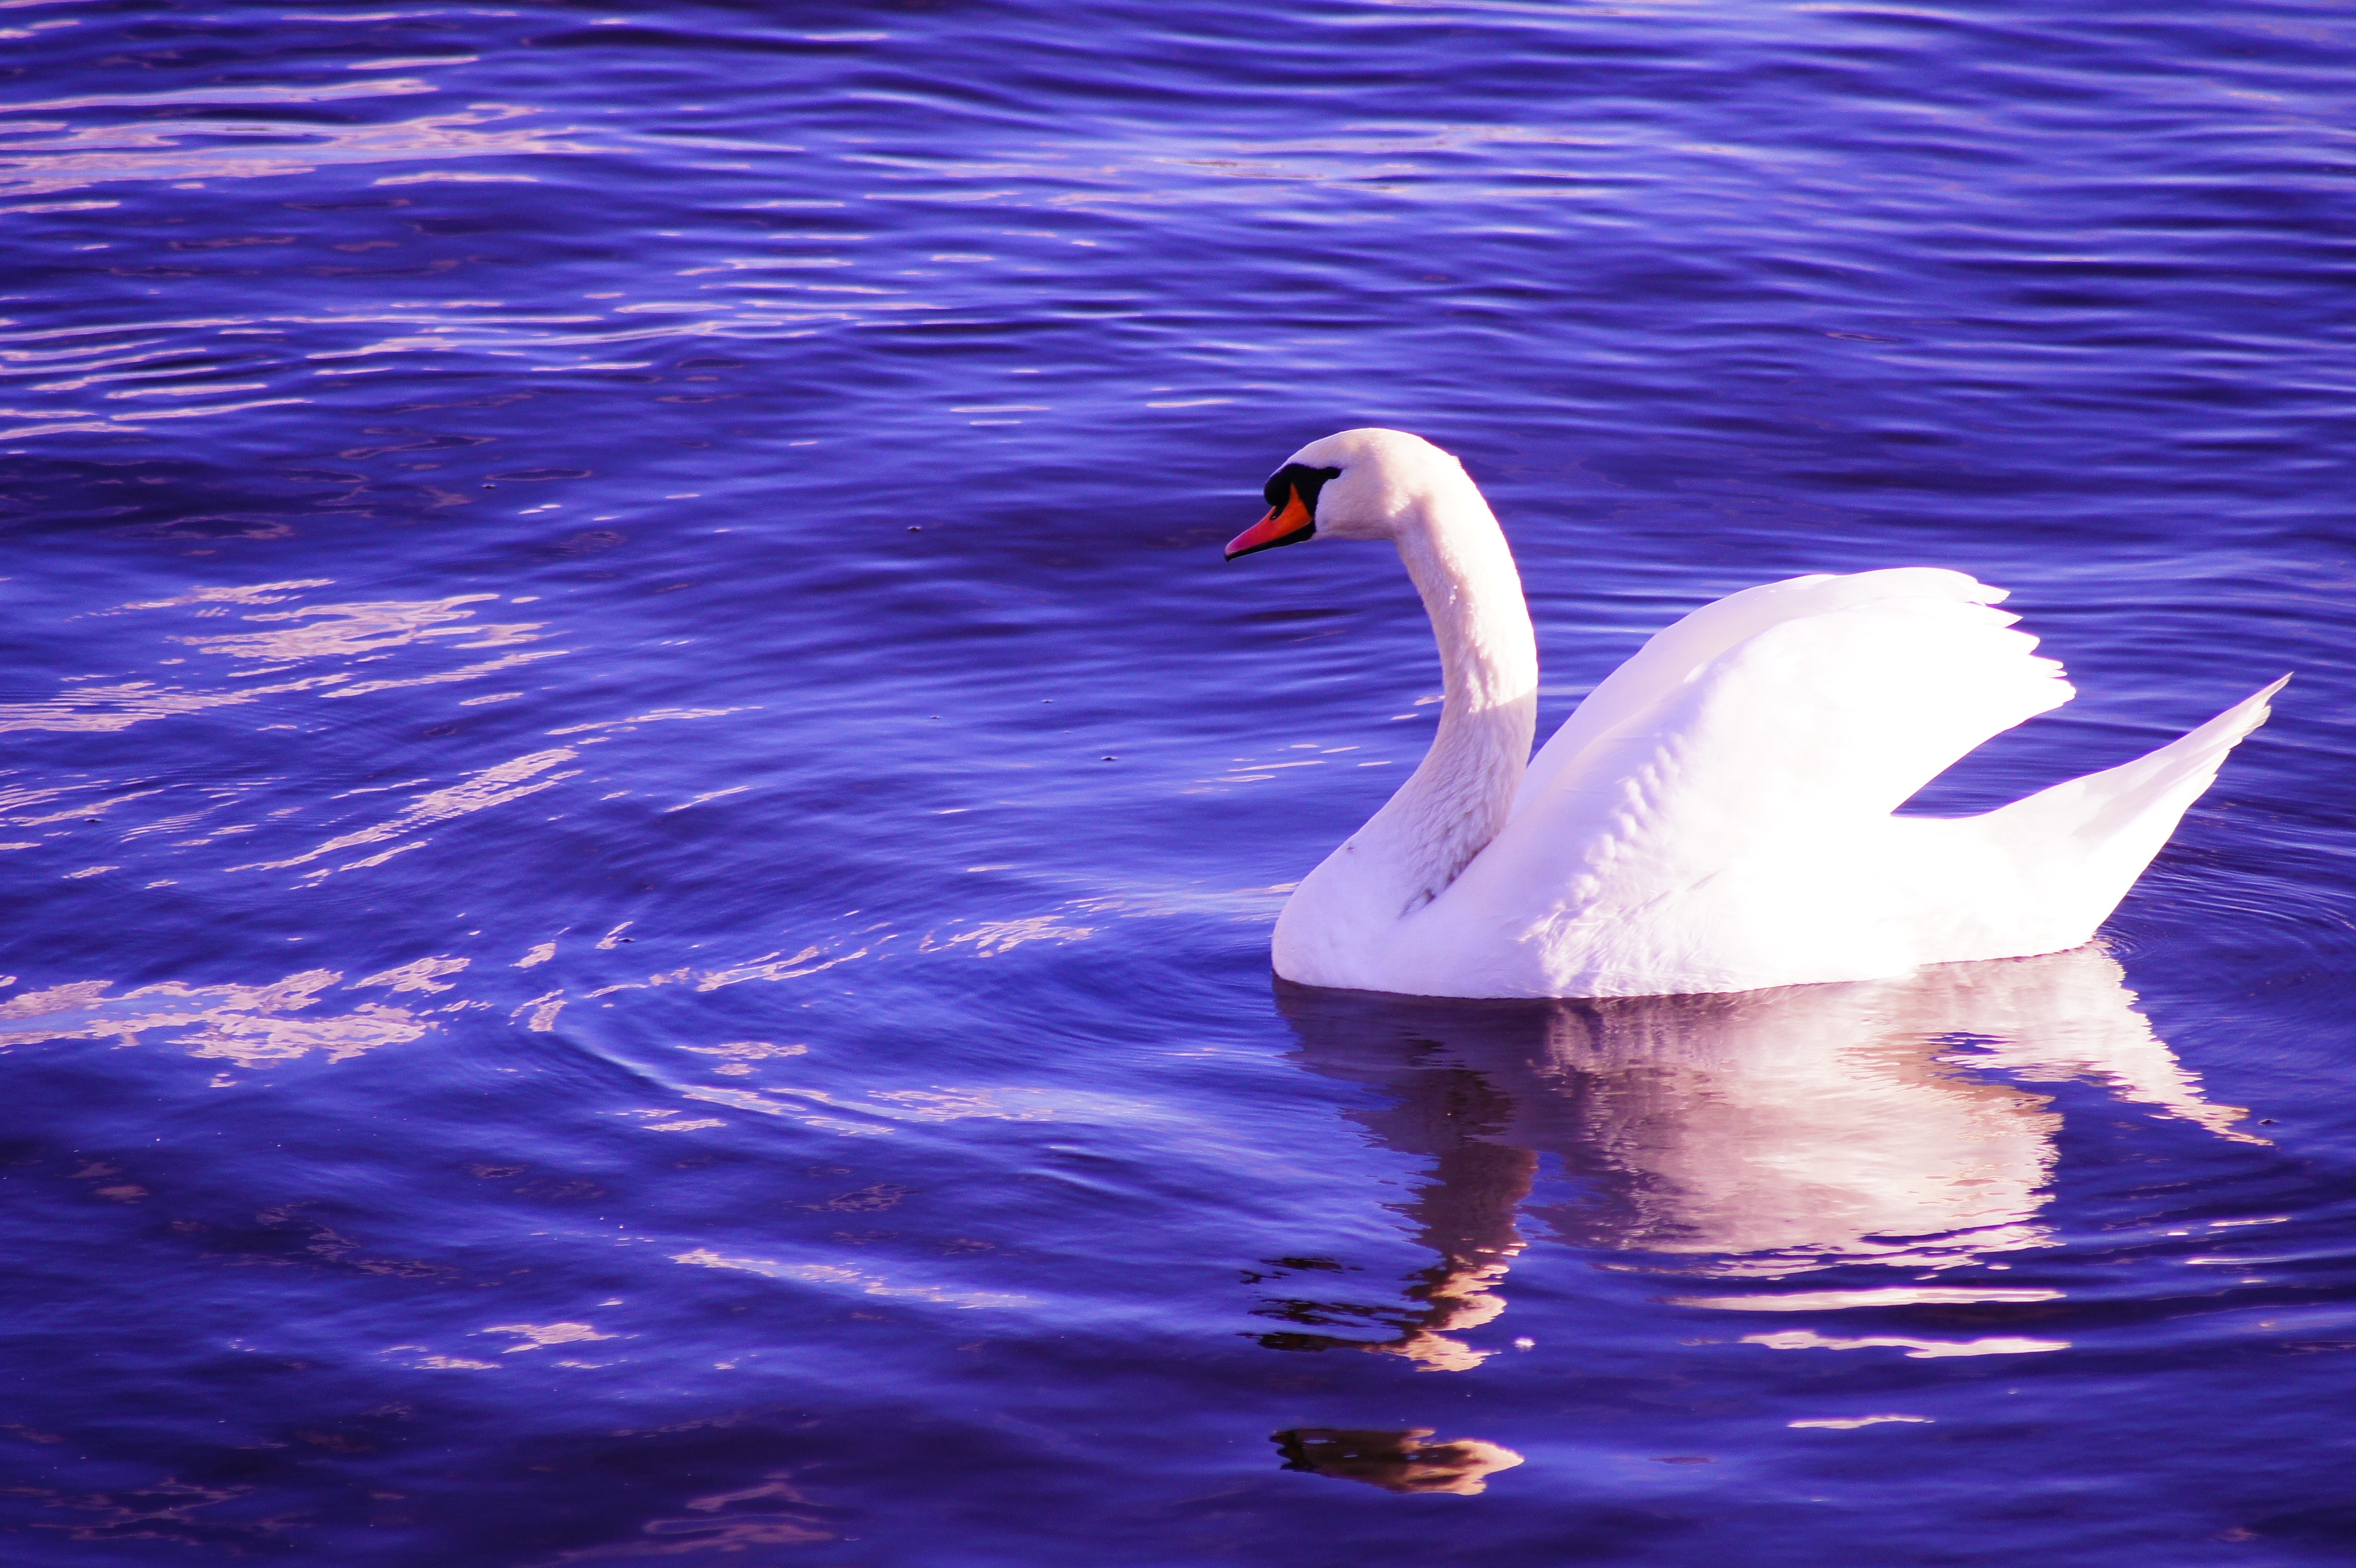 Blue, Water, Bird, Swan, White, one animal, animal themes